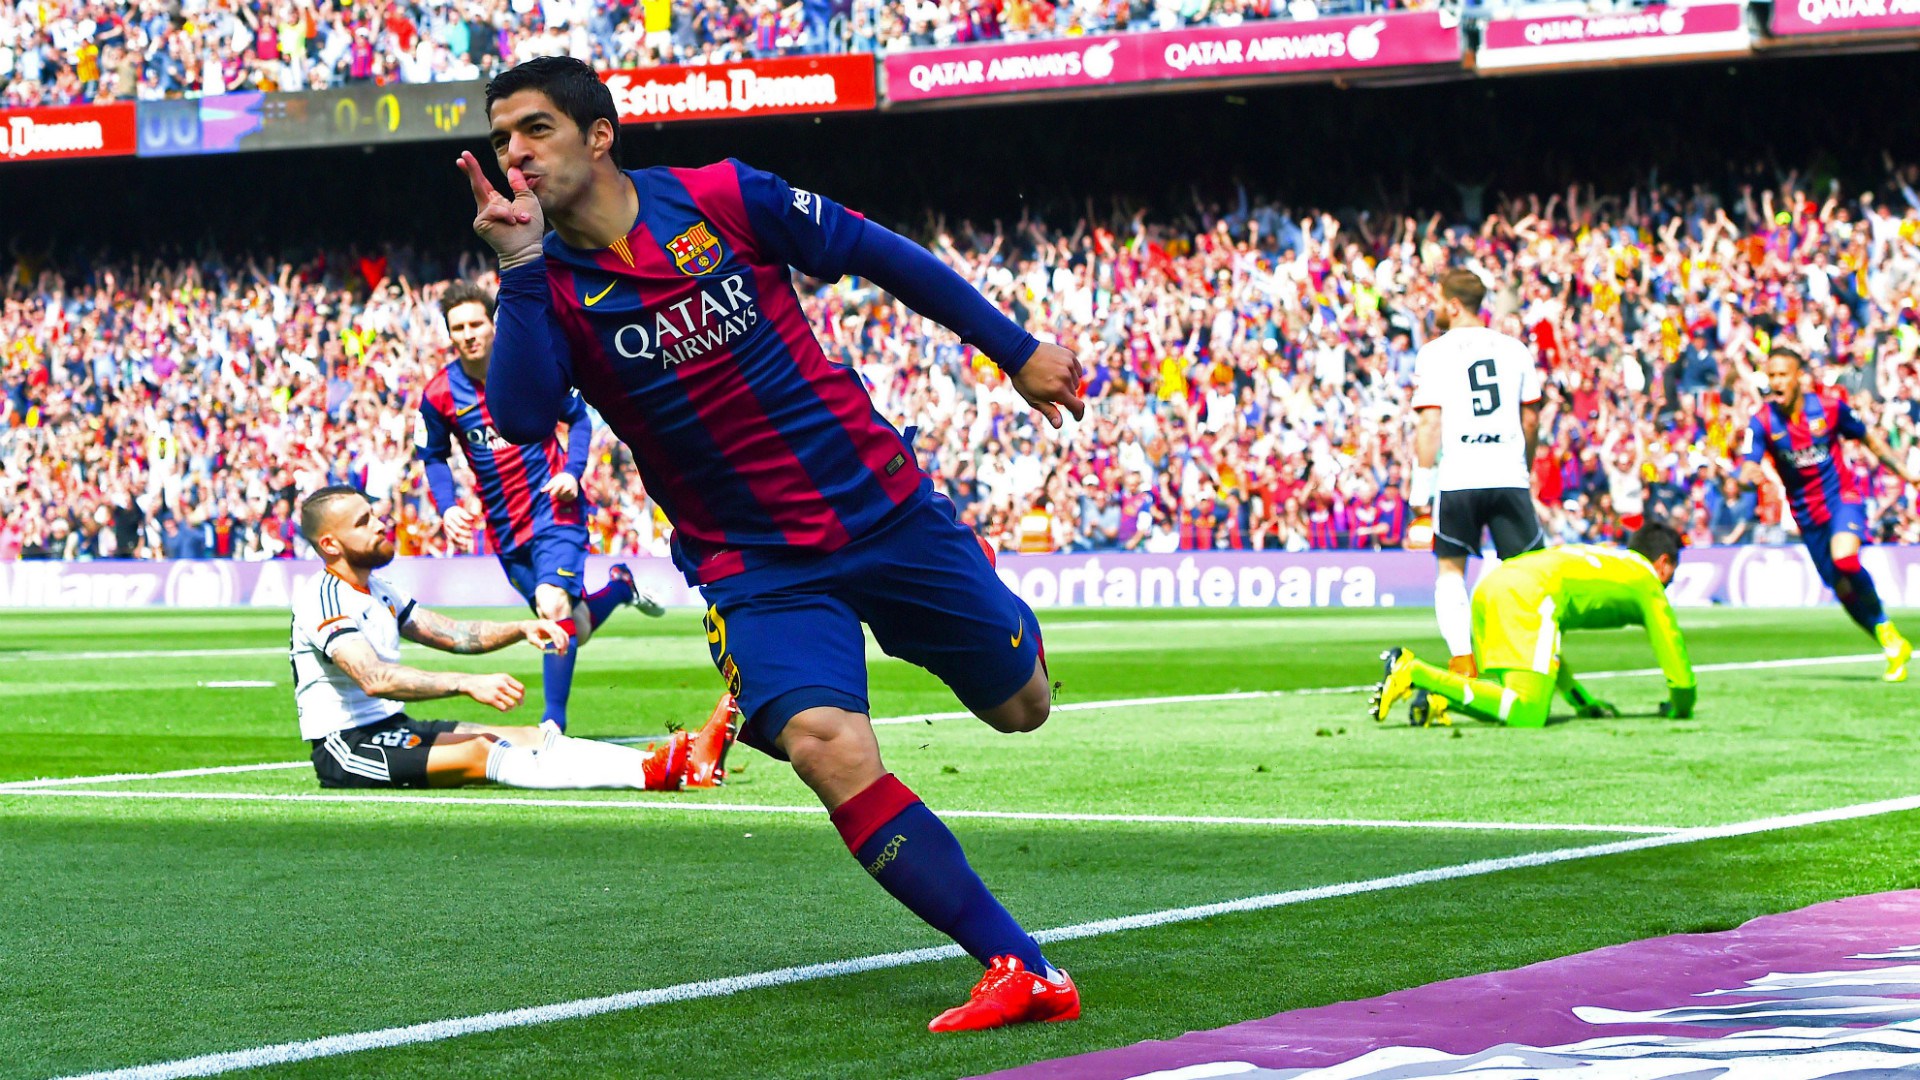 Hd Luis Suarez Football Soccer Player Free Kick Ball Running Background Mobile Desktop Download Photos